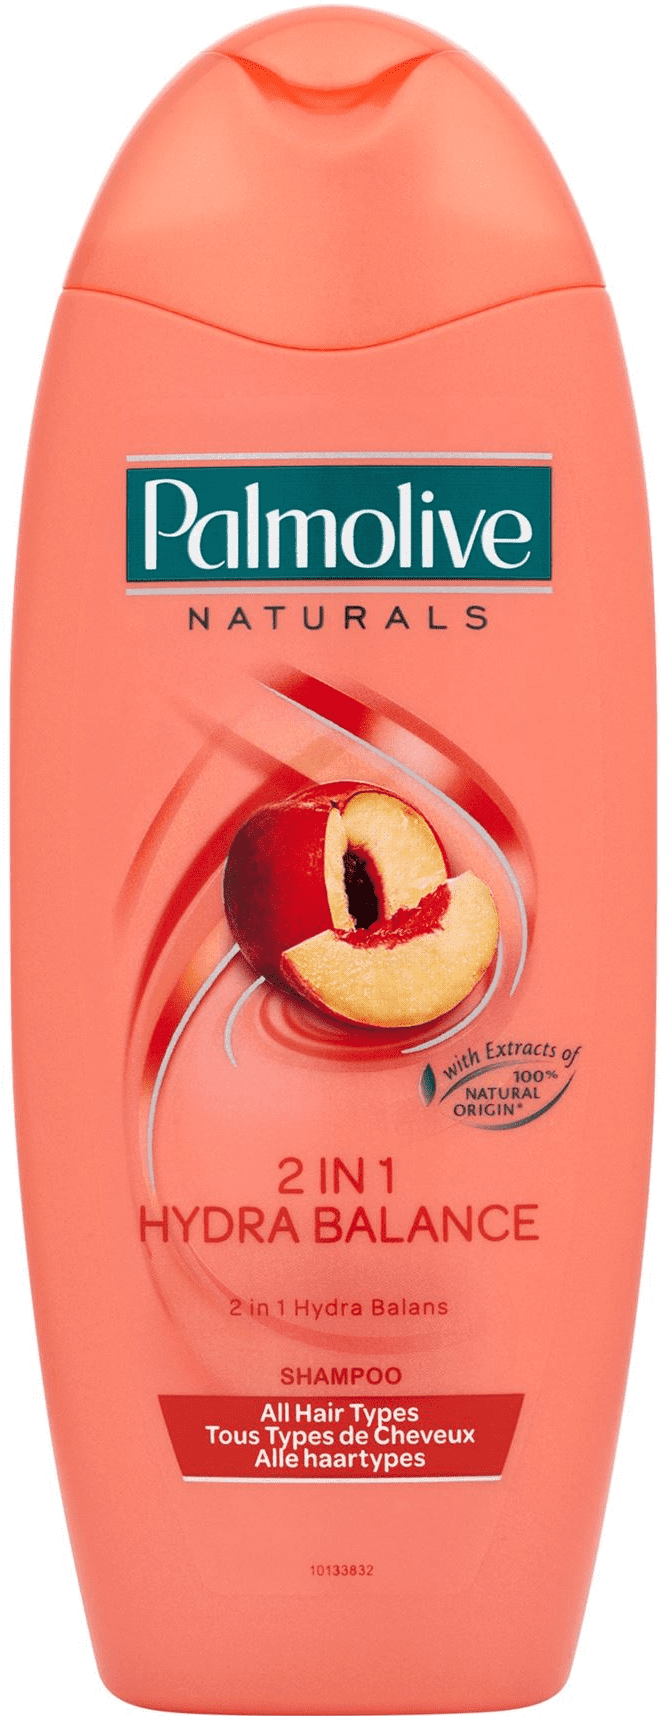 Palmolive Shampoo 2 in 1 Hydra Balance 350 ml